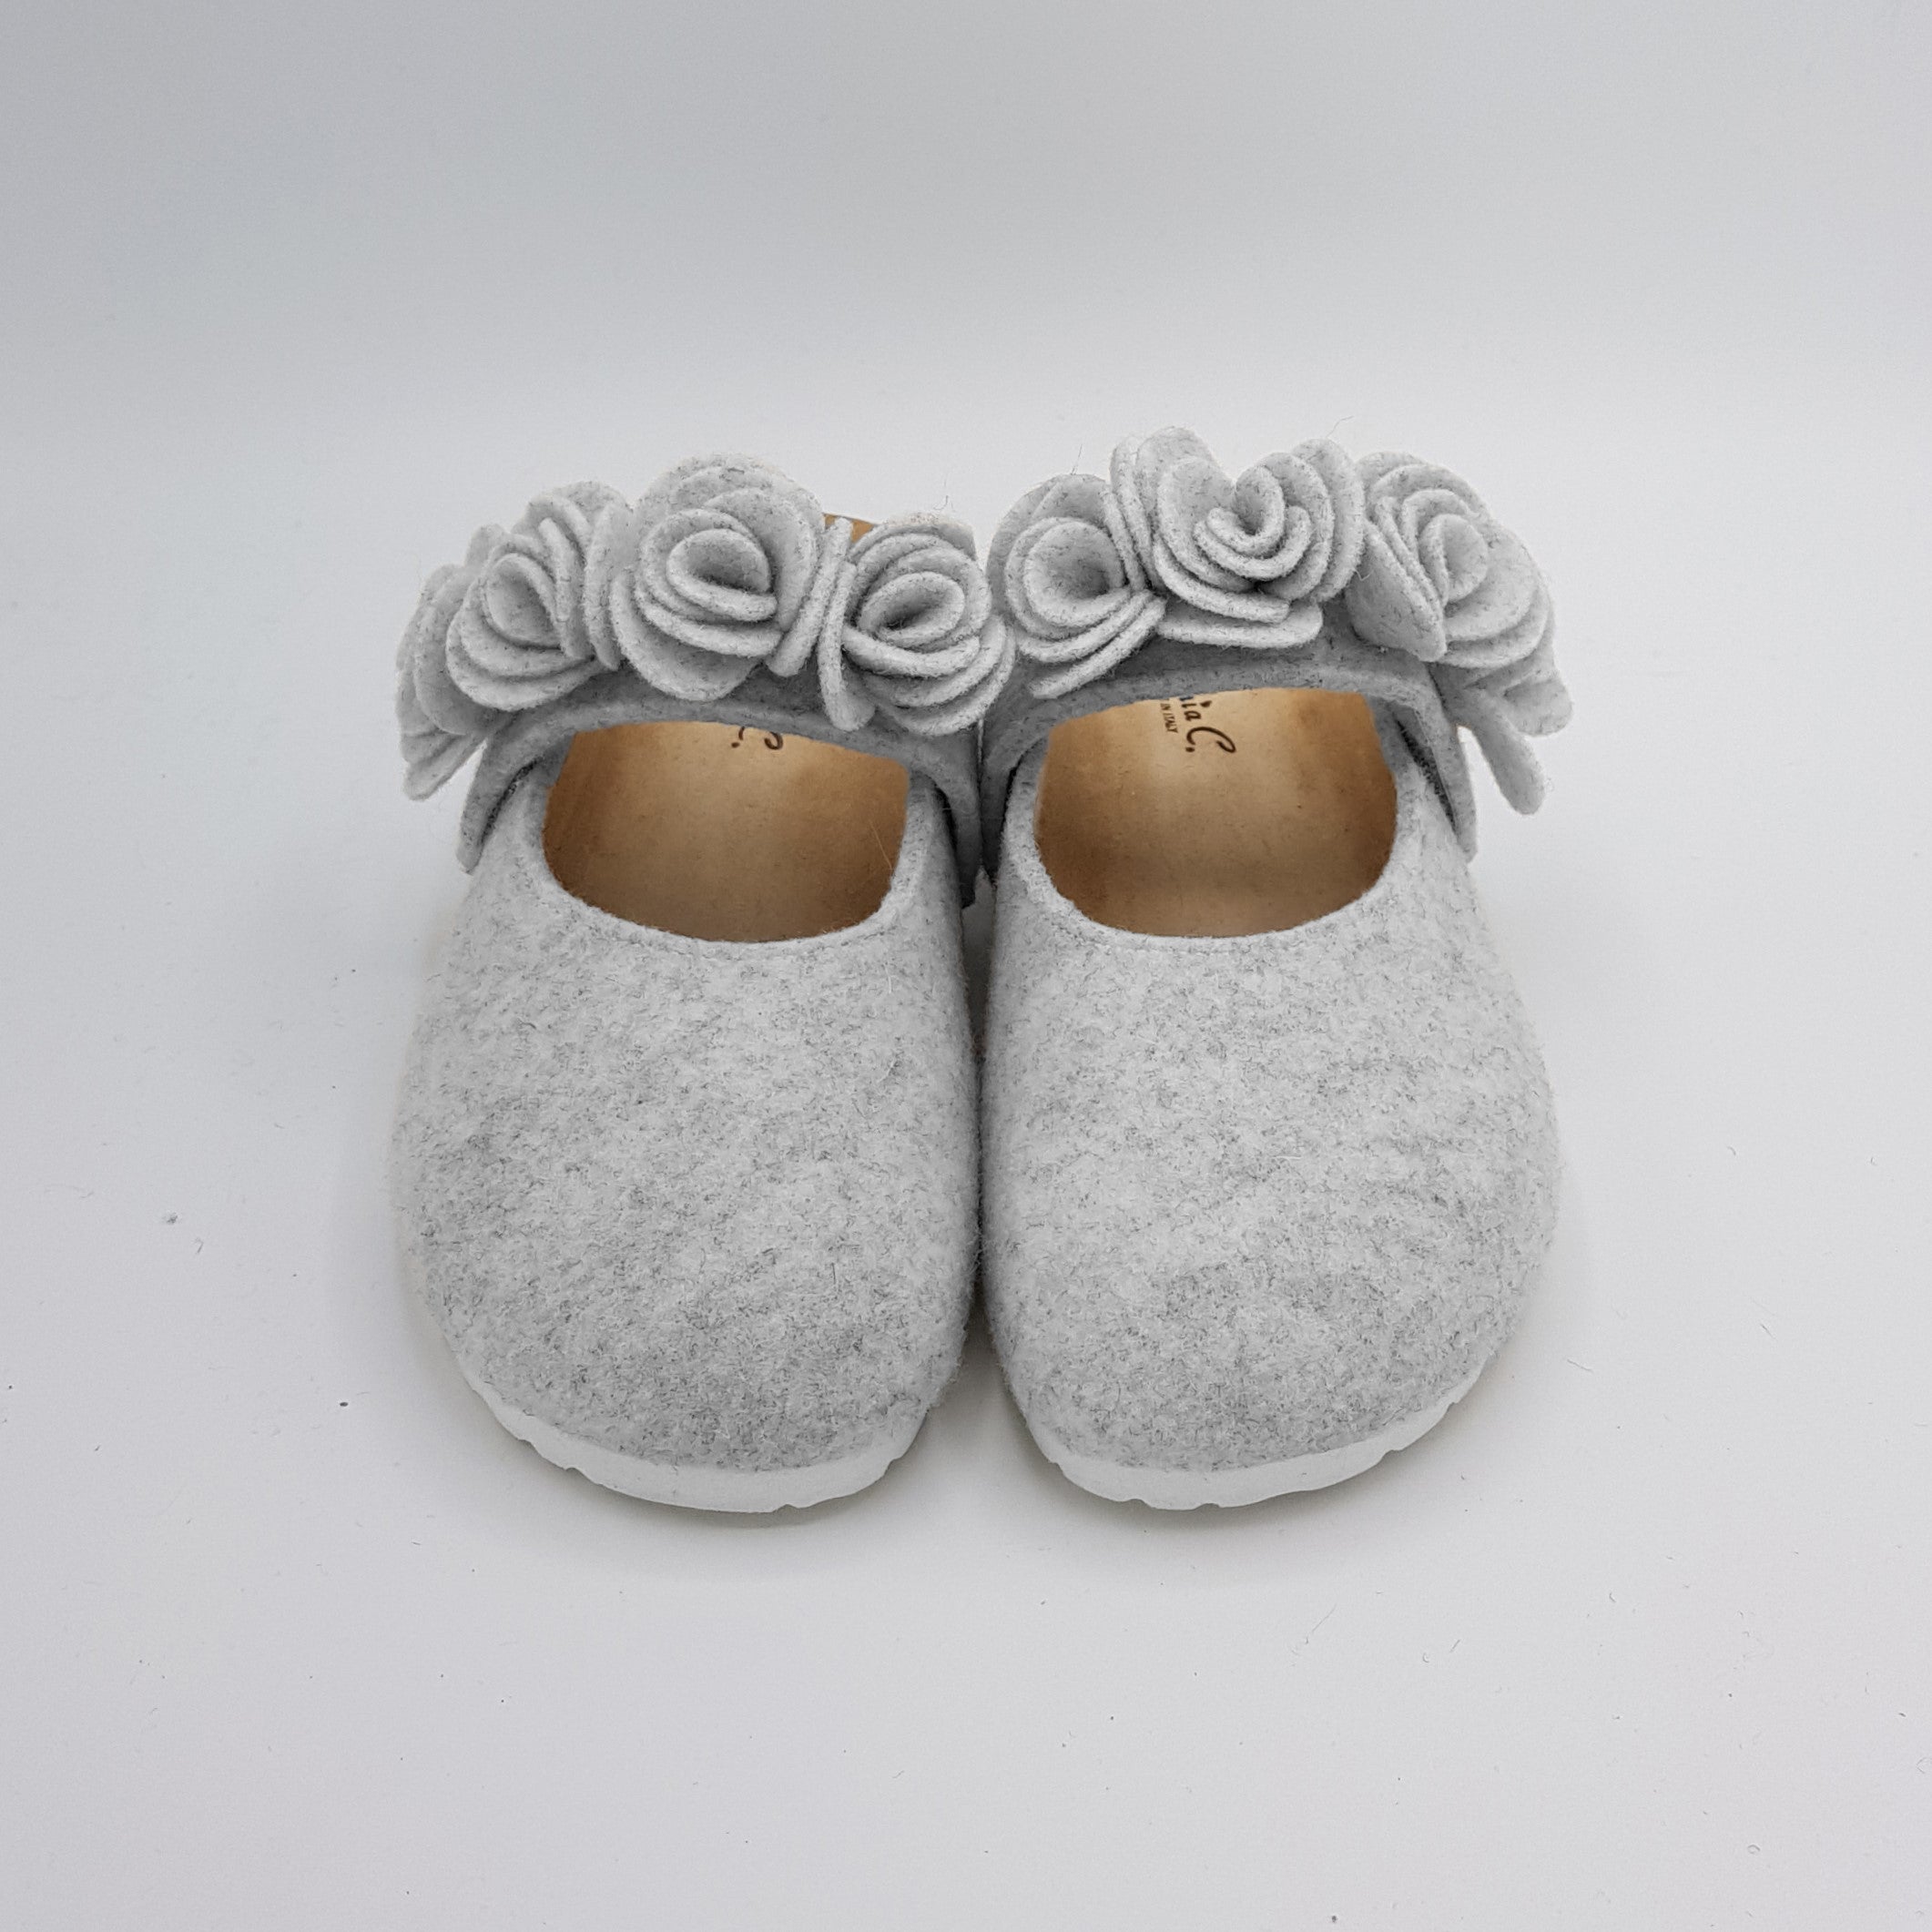 Pantofola DONNA in lana. Colori VARI | Art.109imb